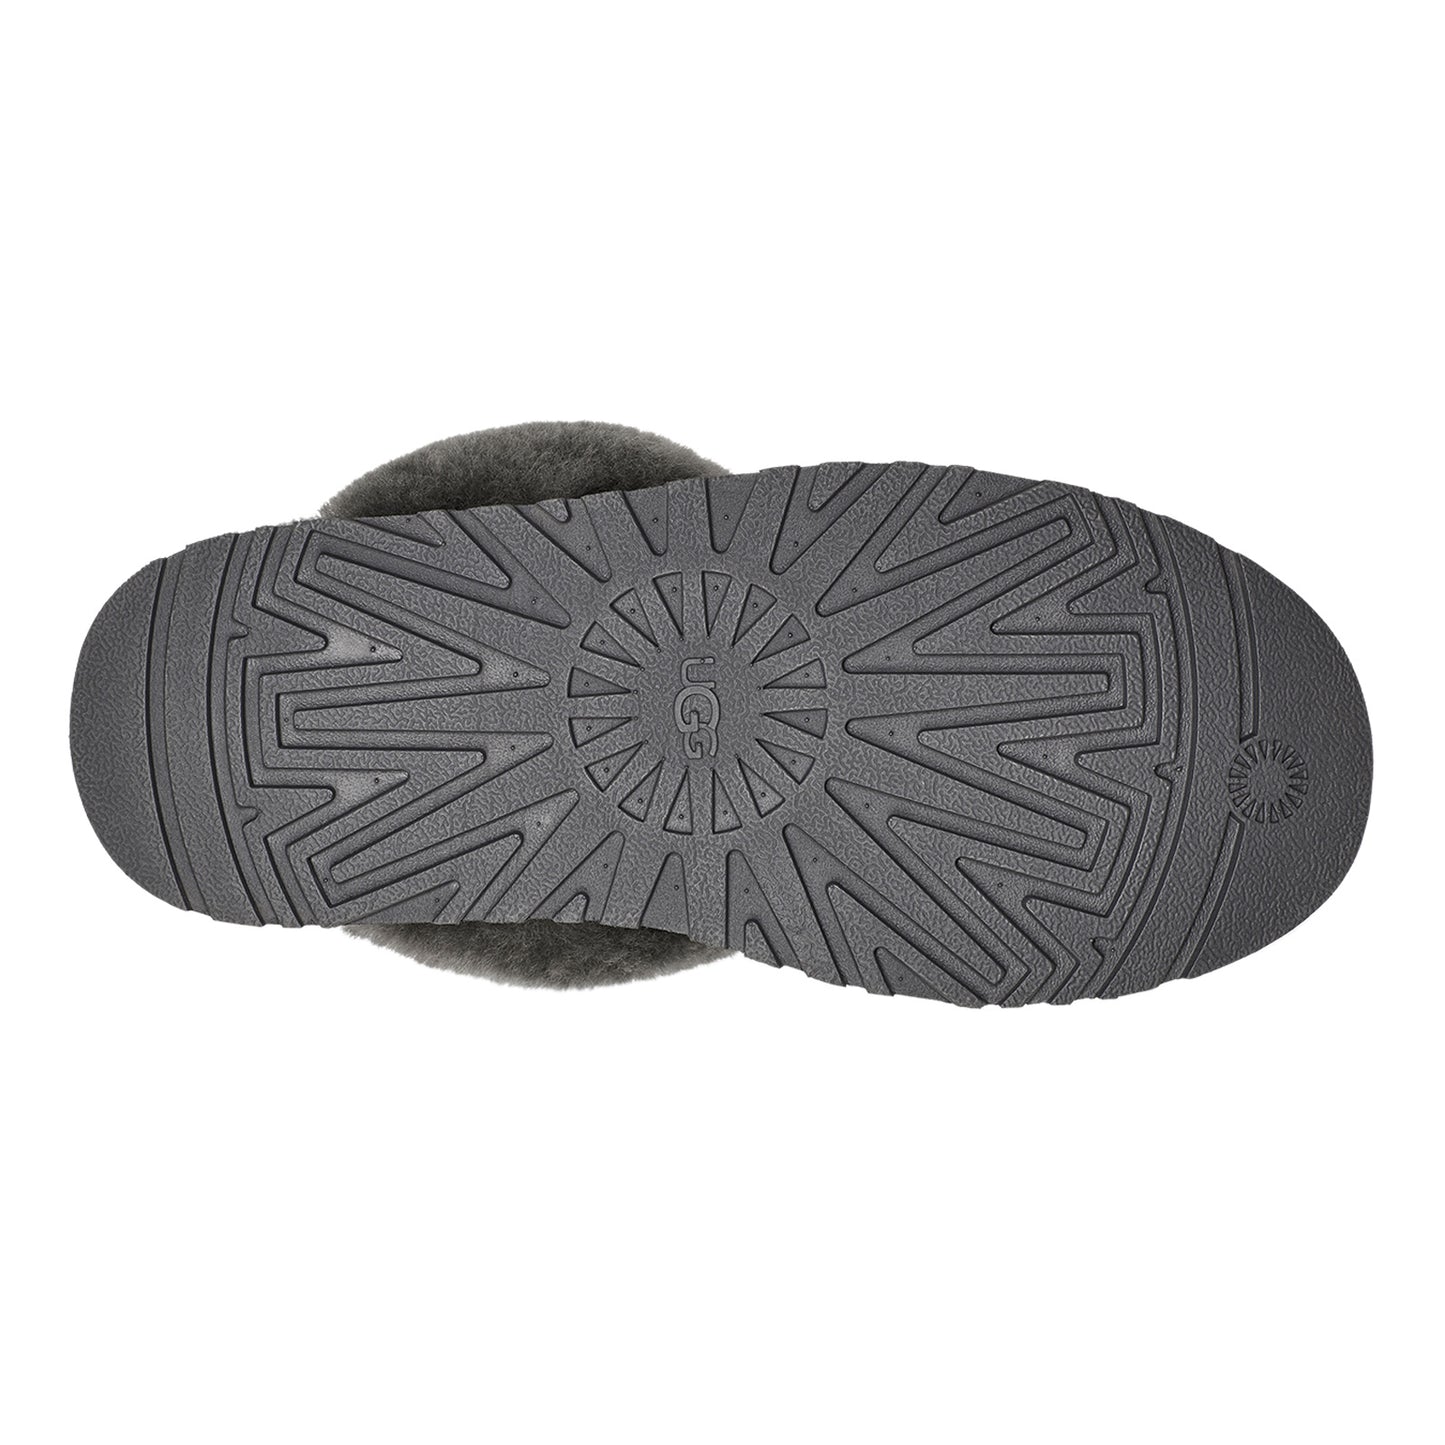 Peltz Shoes  Women's Ugg Disquette Slipper CHARCOAL 1122550-CHRC